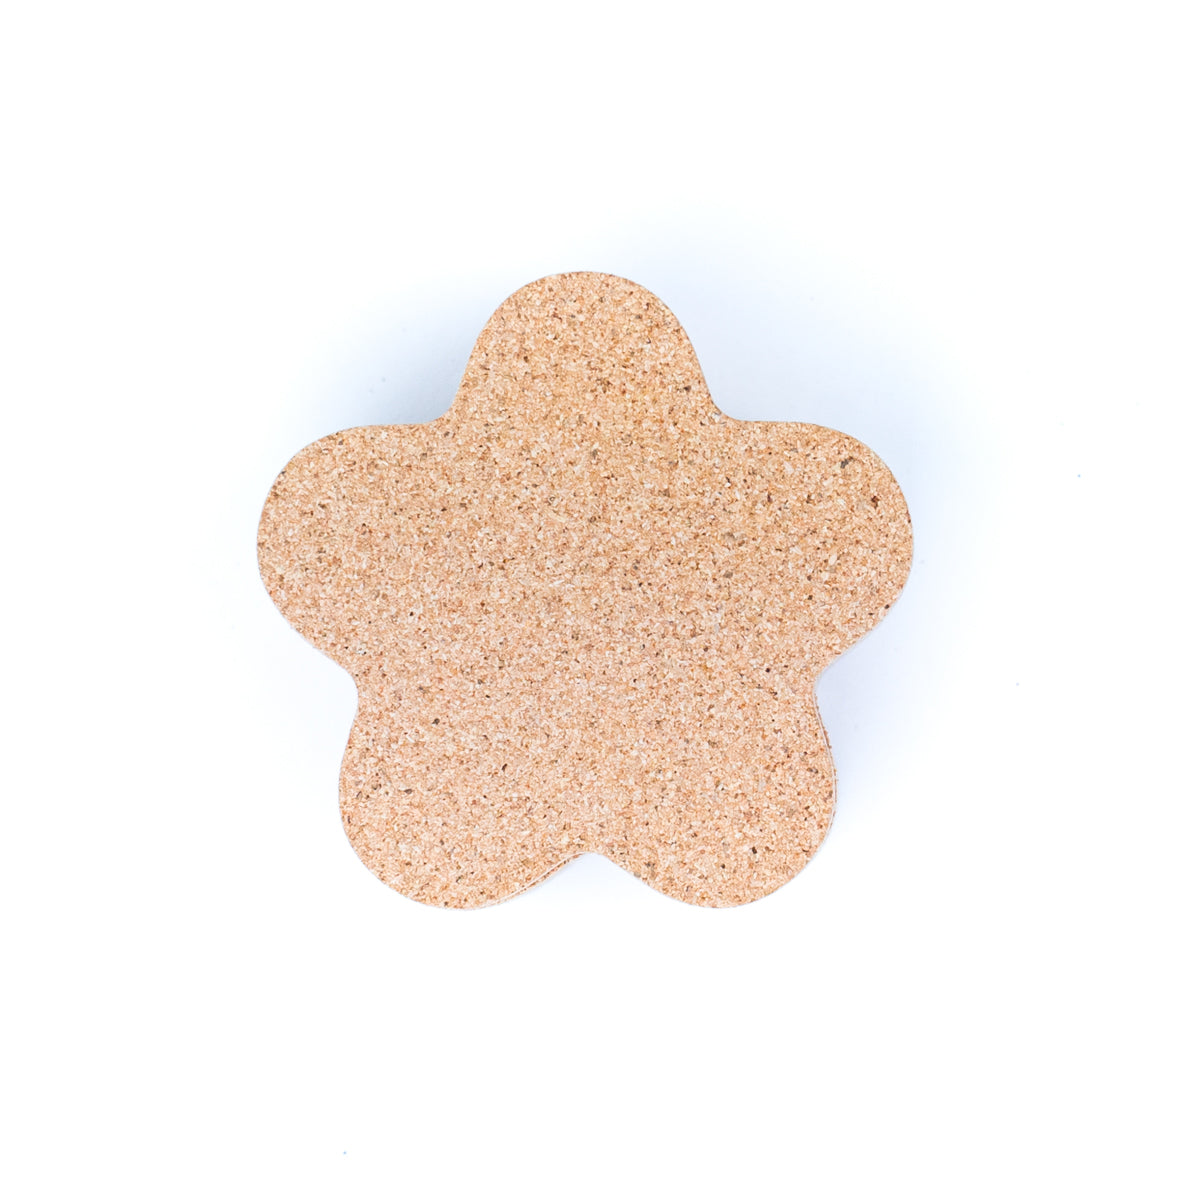 Star shaped Versatile Cork Keepsake Box | THE CORK COLLECTION